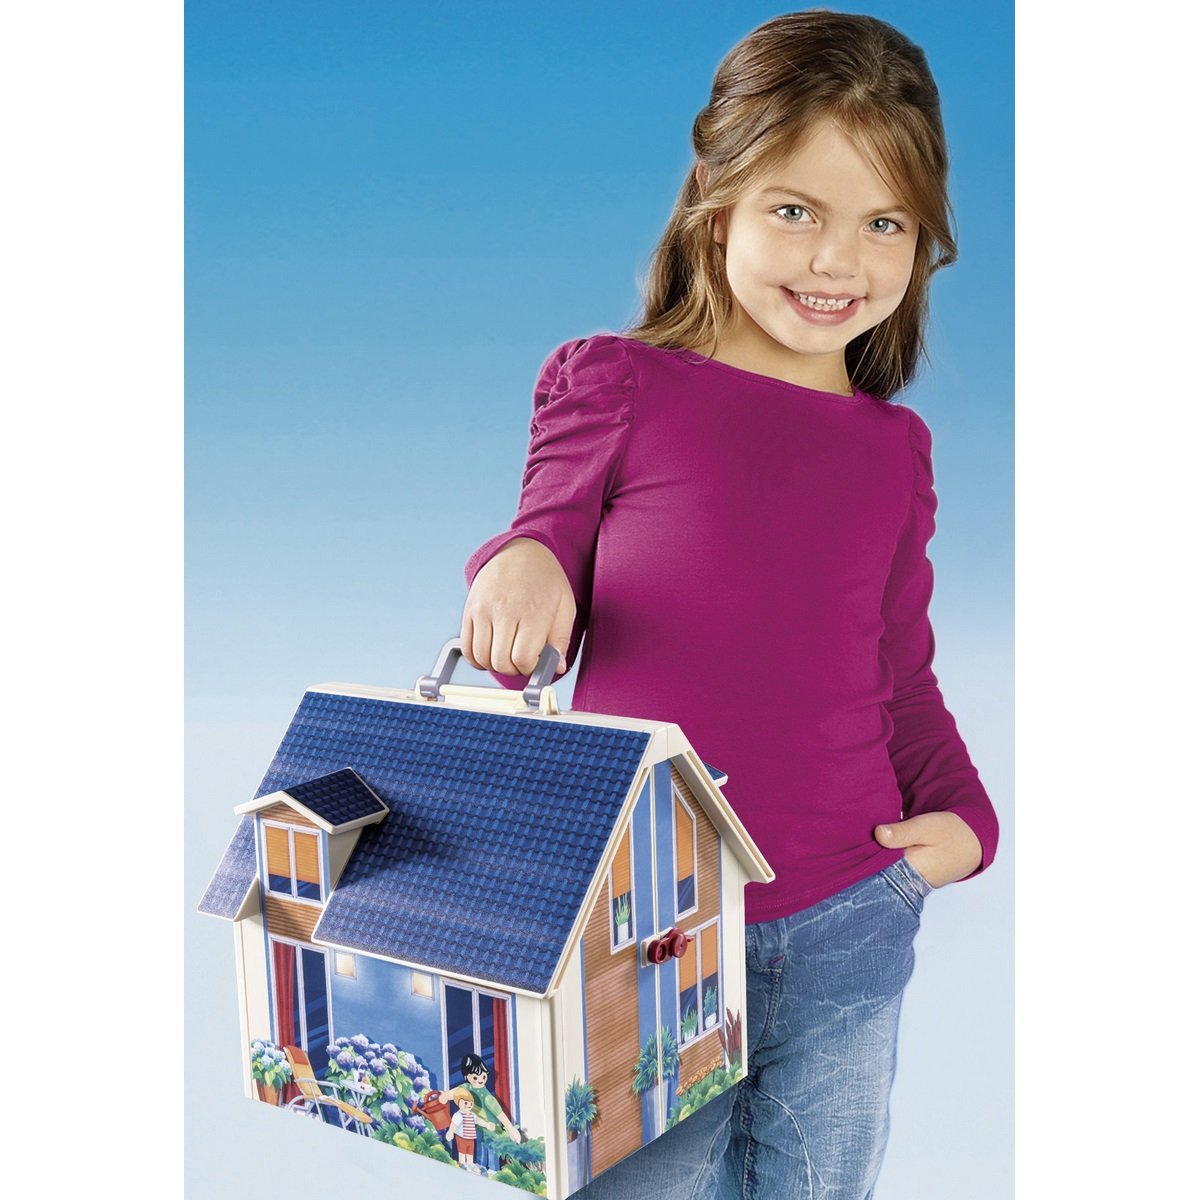 Maison Playmobil en solde